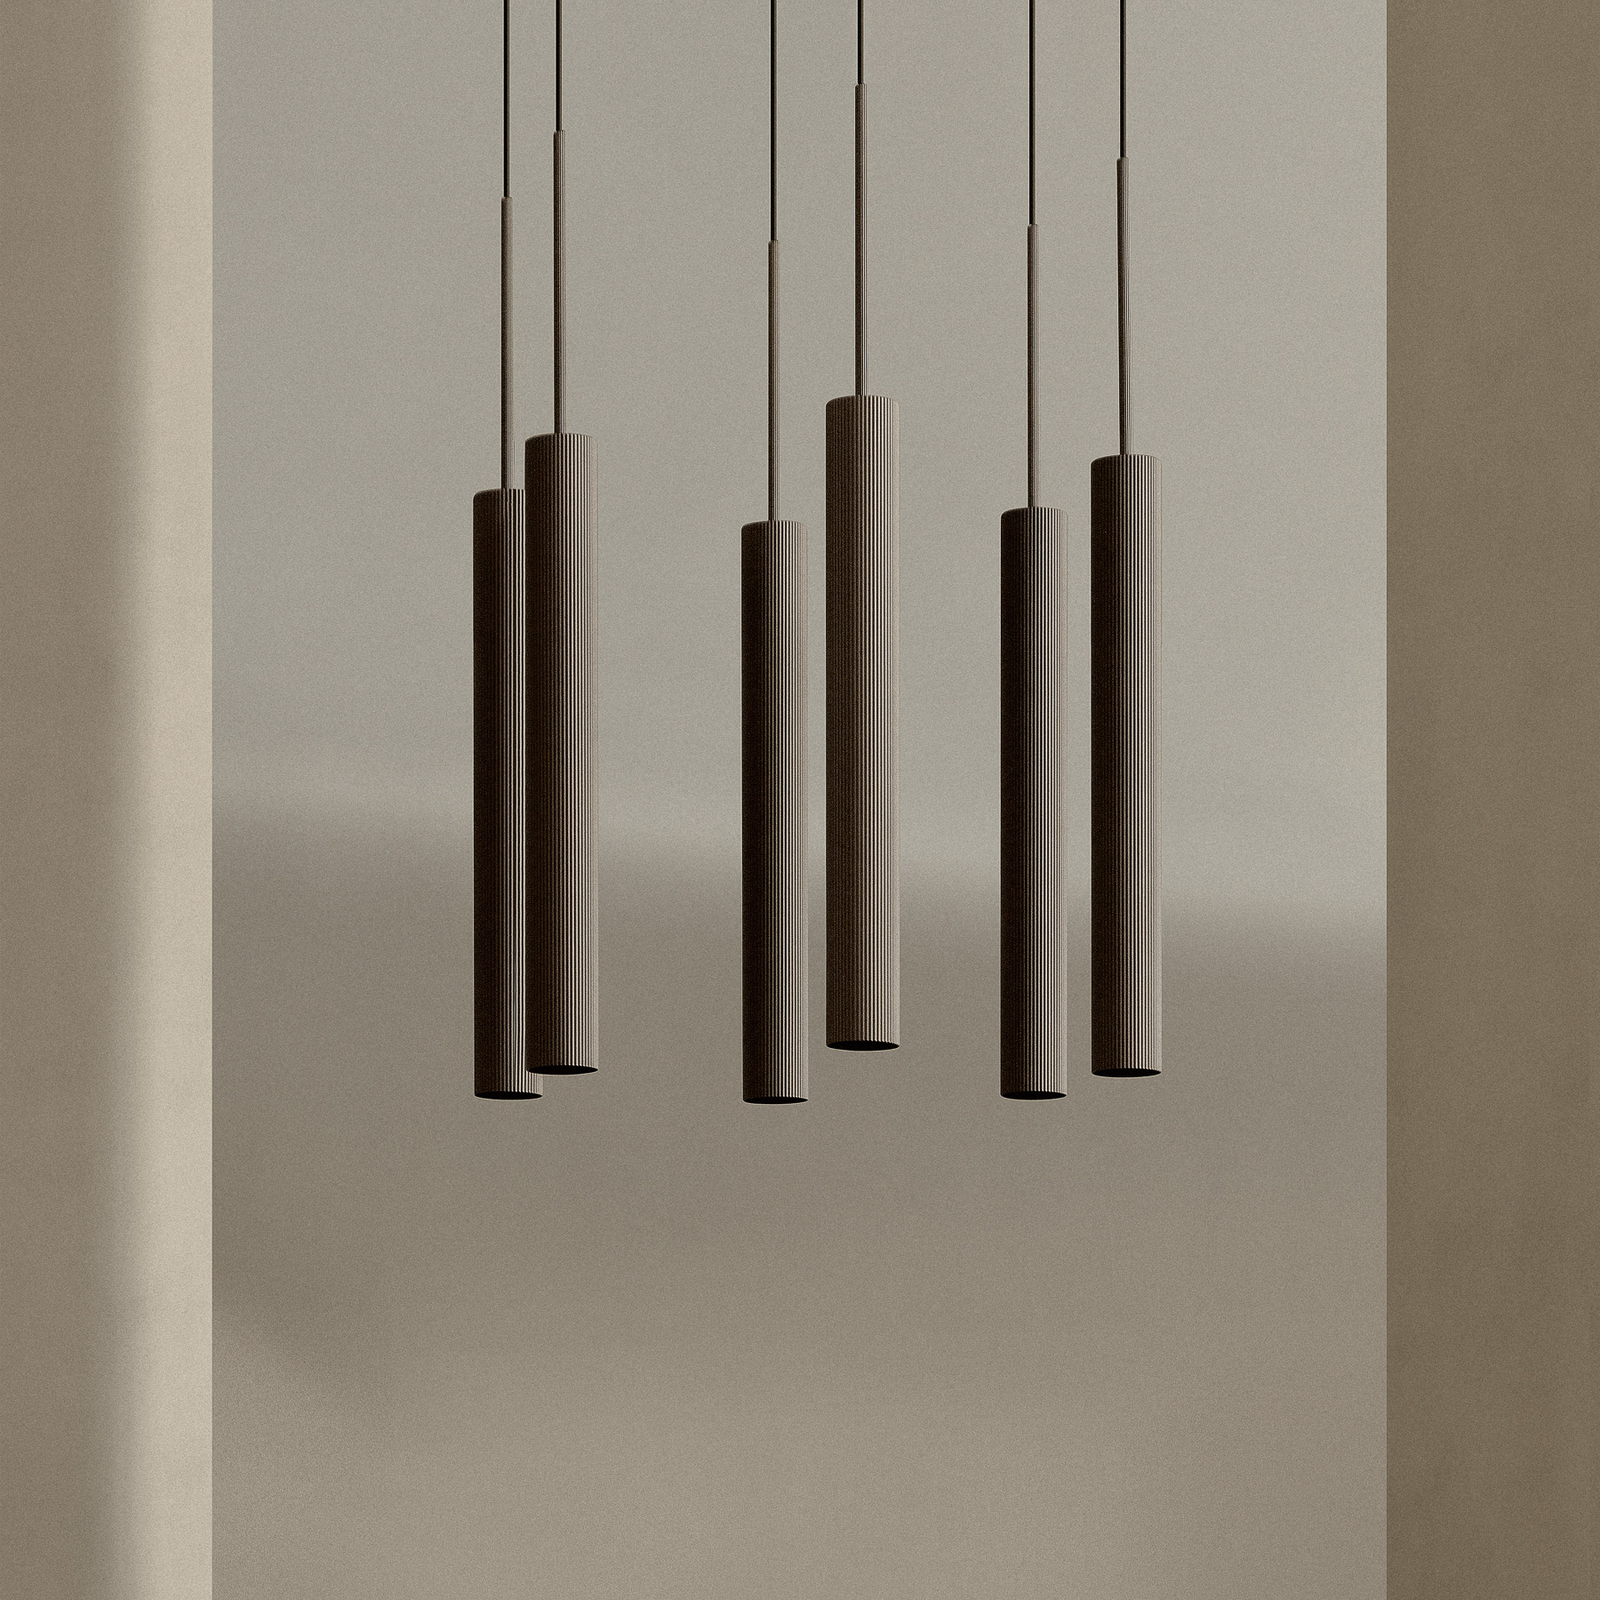 Audo hanglamp Tubulaire, brons, aluminium, 6-lamps, ring